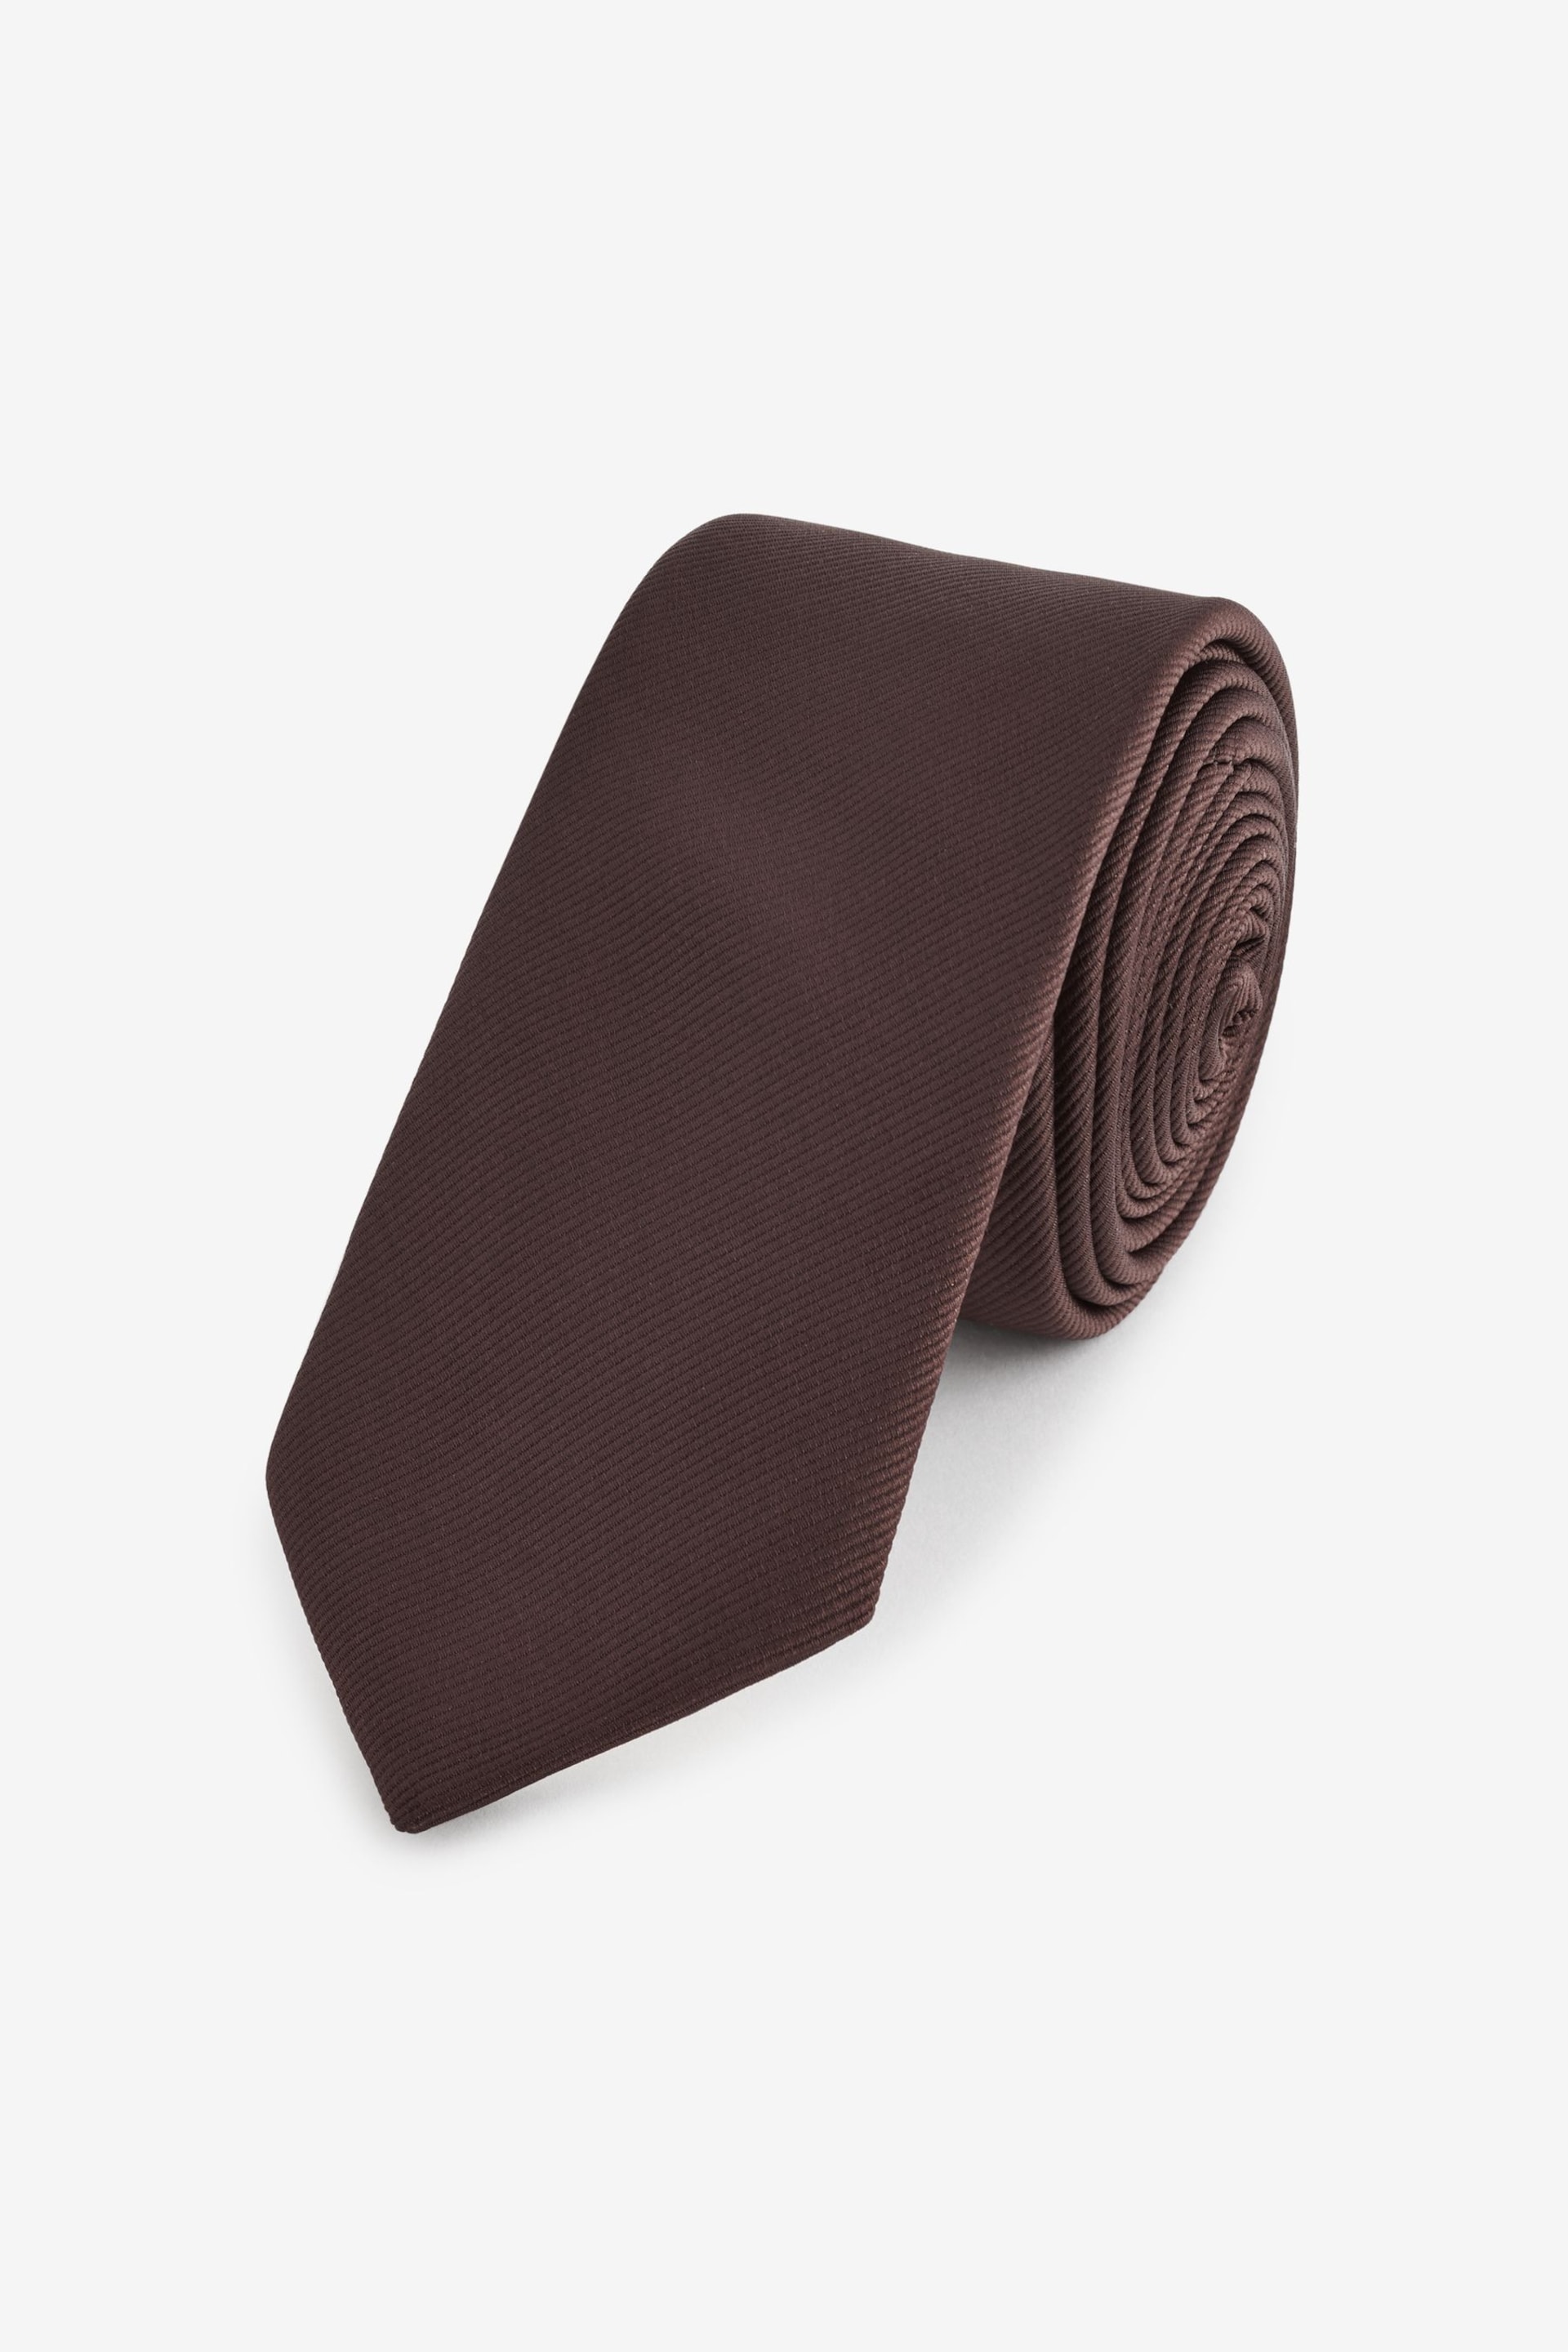 Chocolate Brown Slim Twill Tie - Image 1 of 4